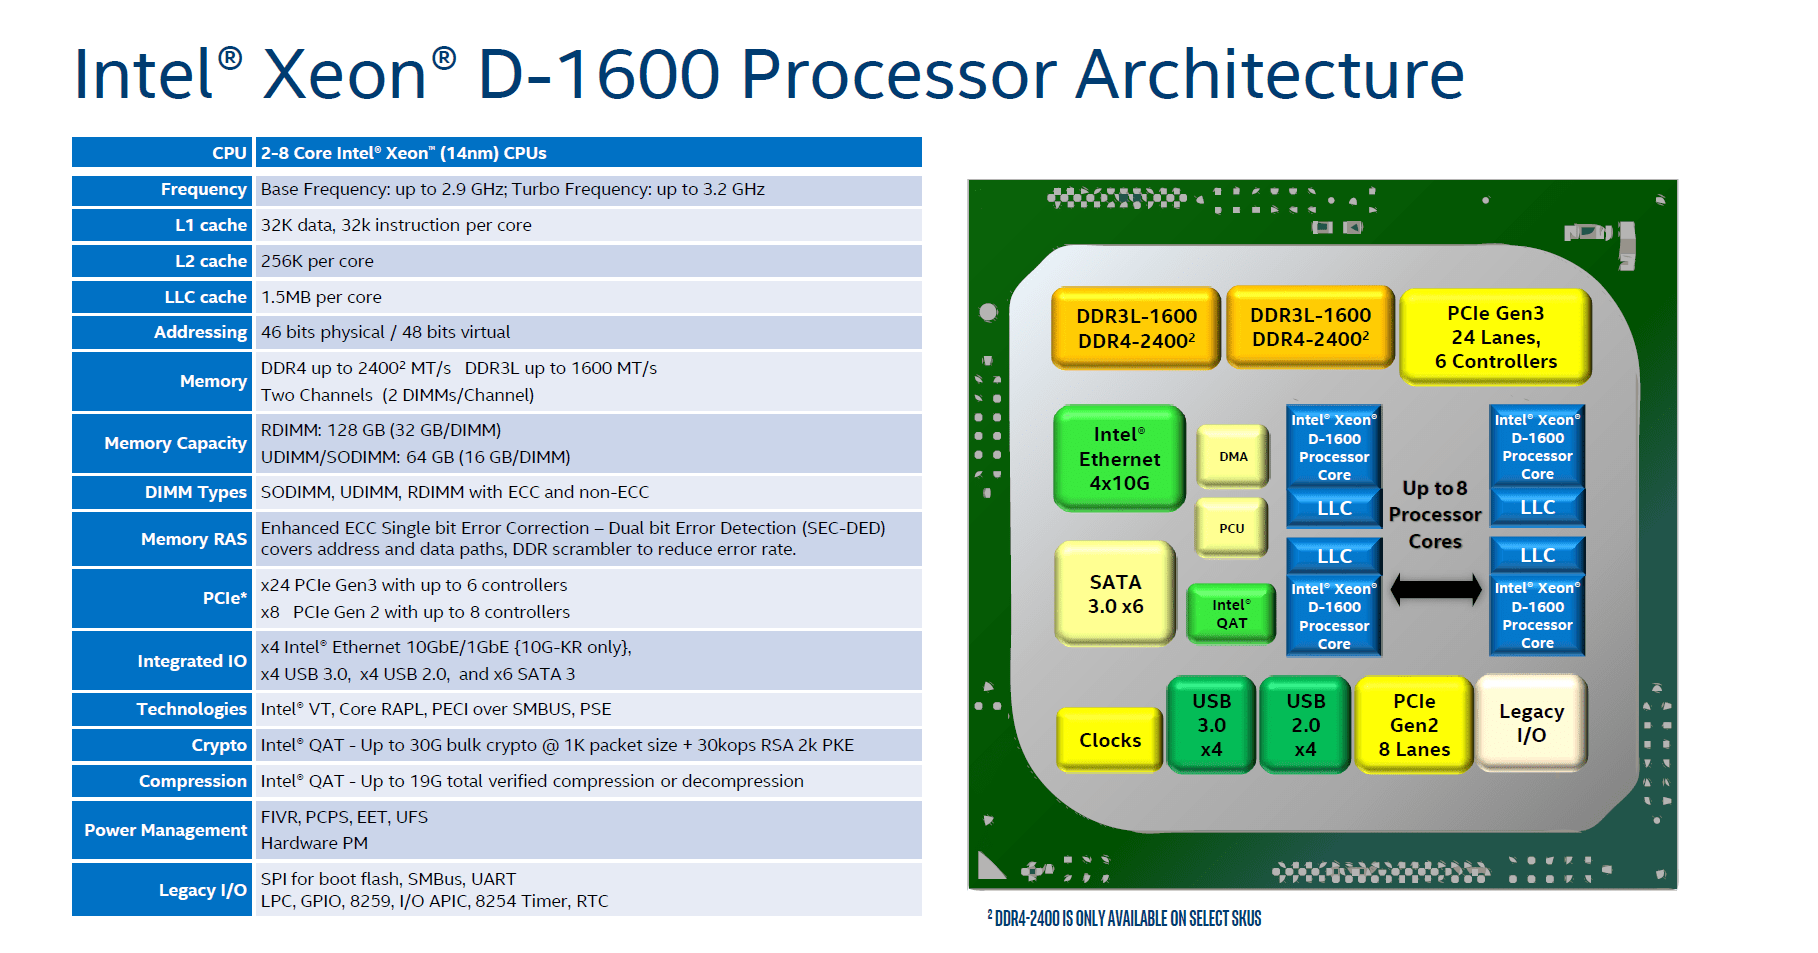 Xeon D-1600